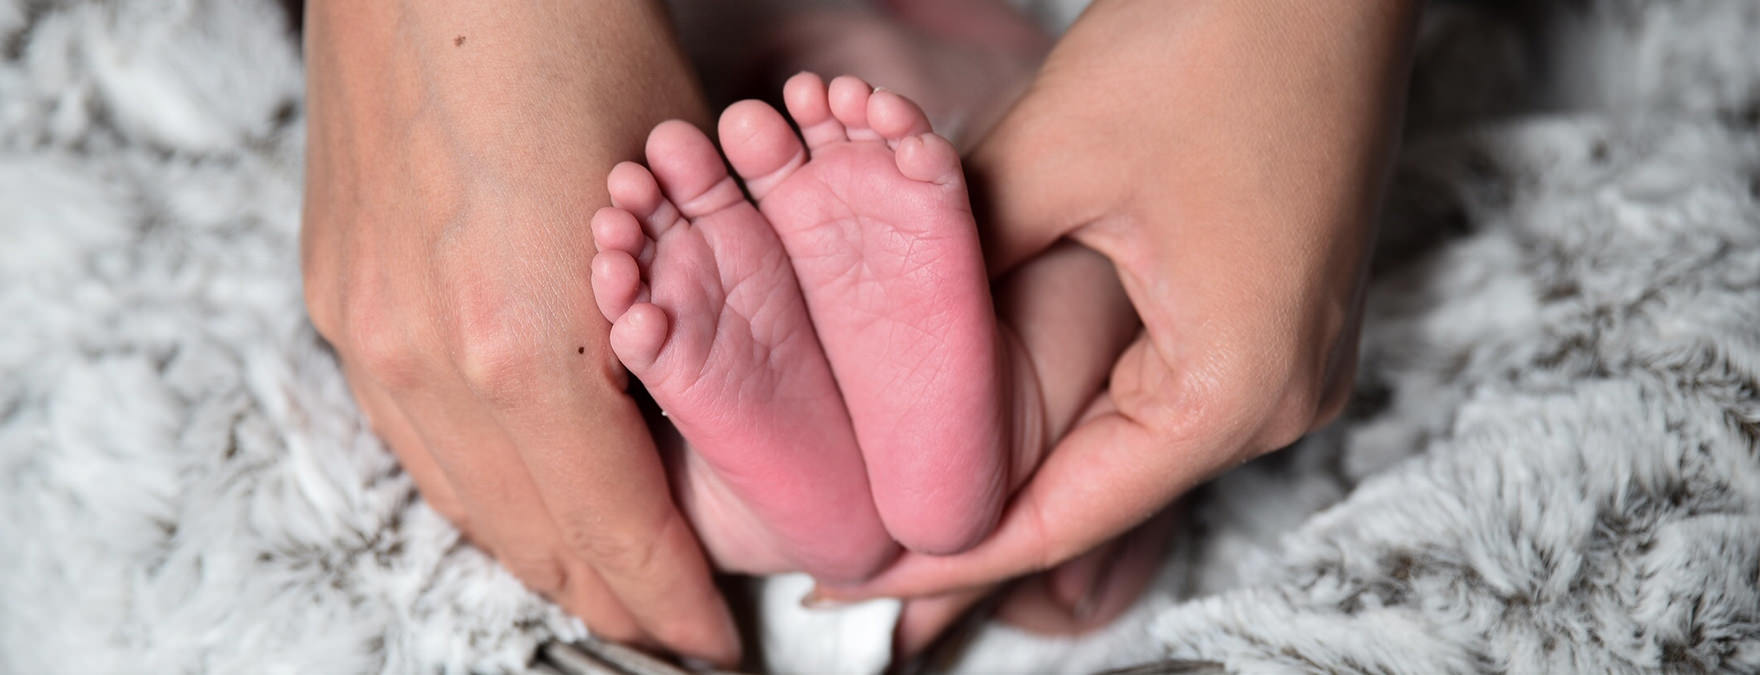 Hands holding tiny baby feet